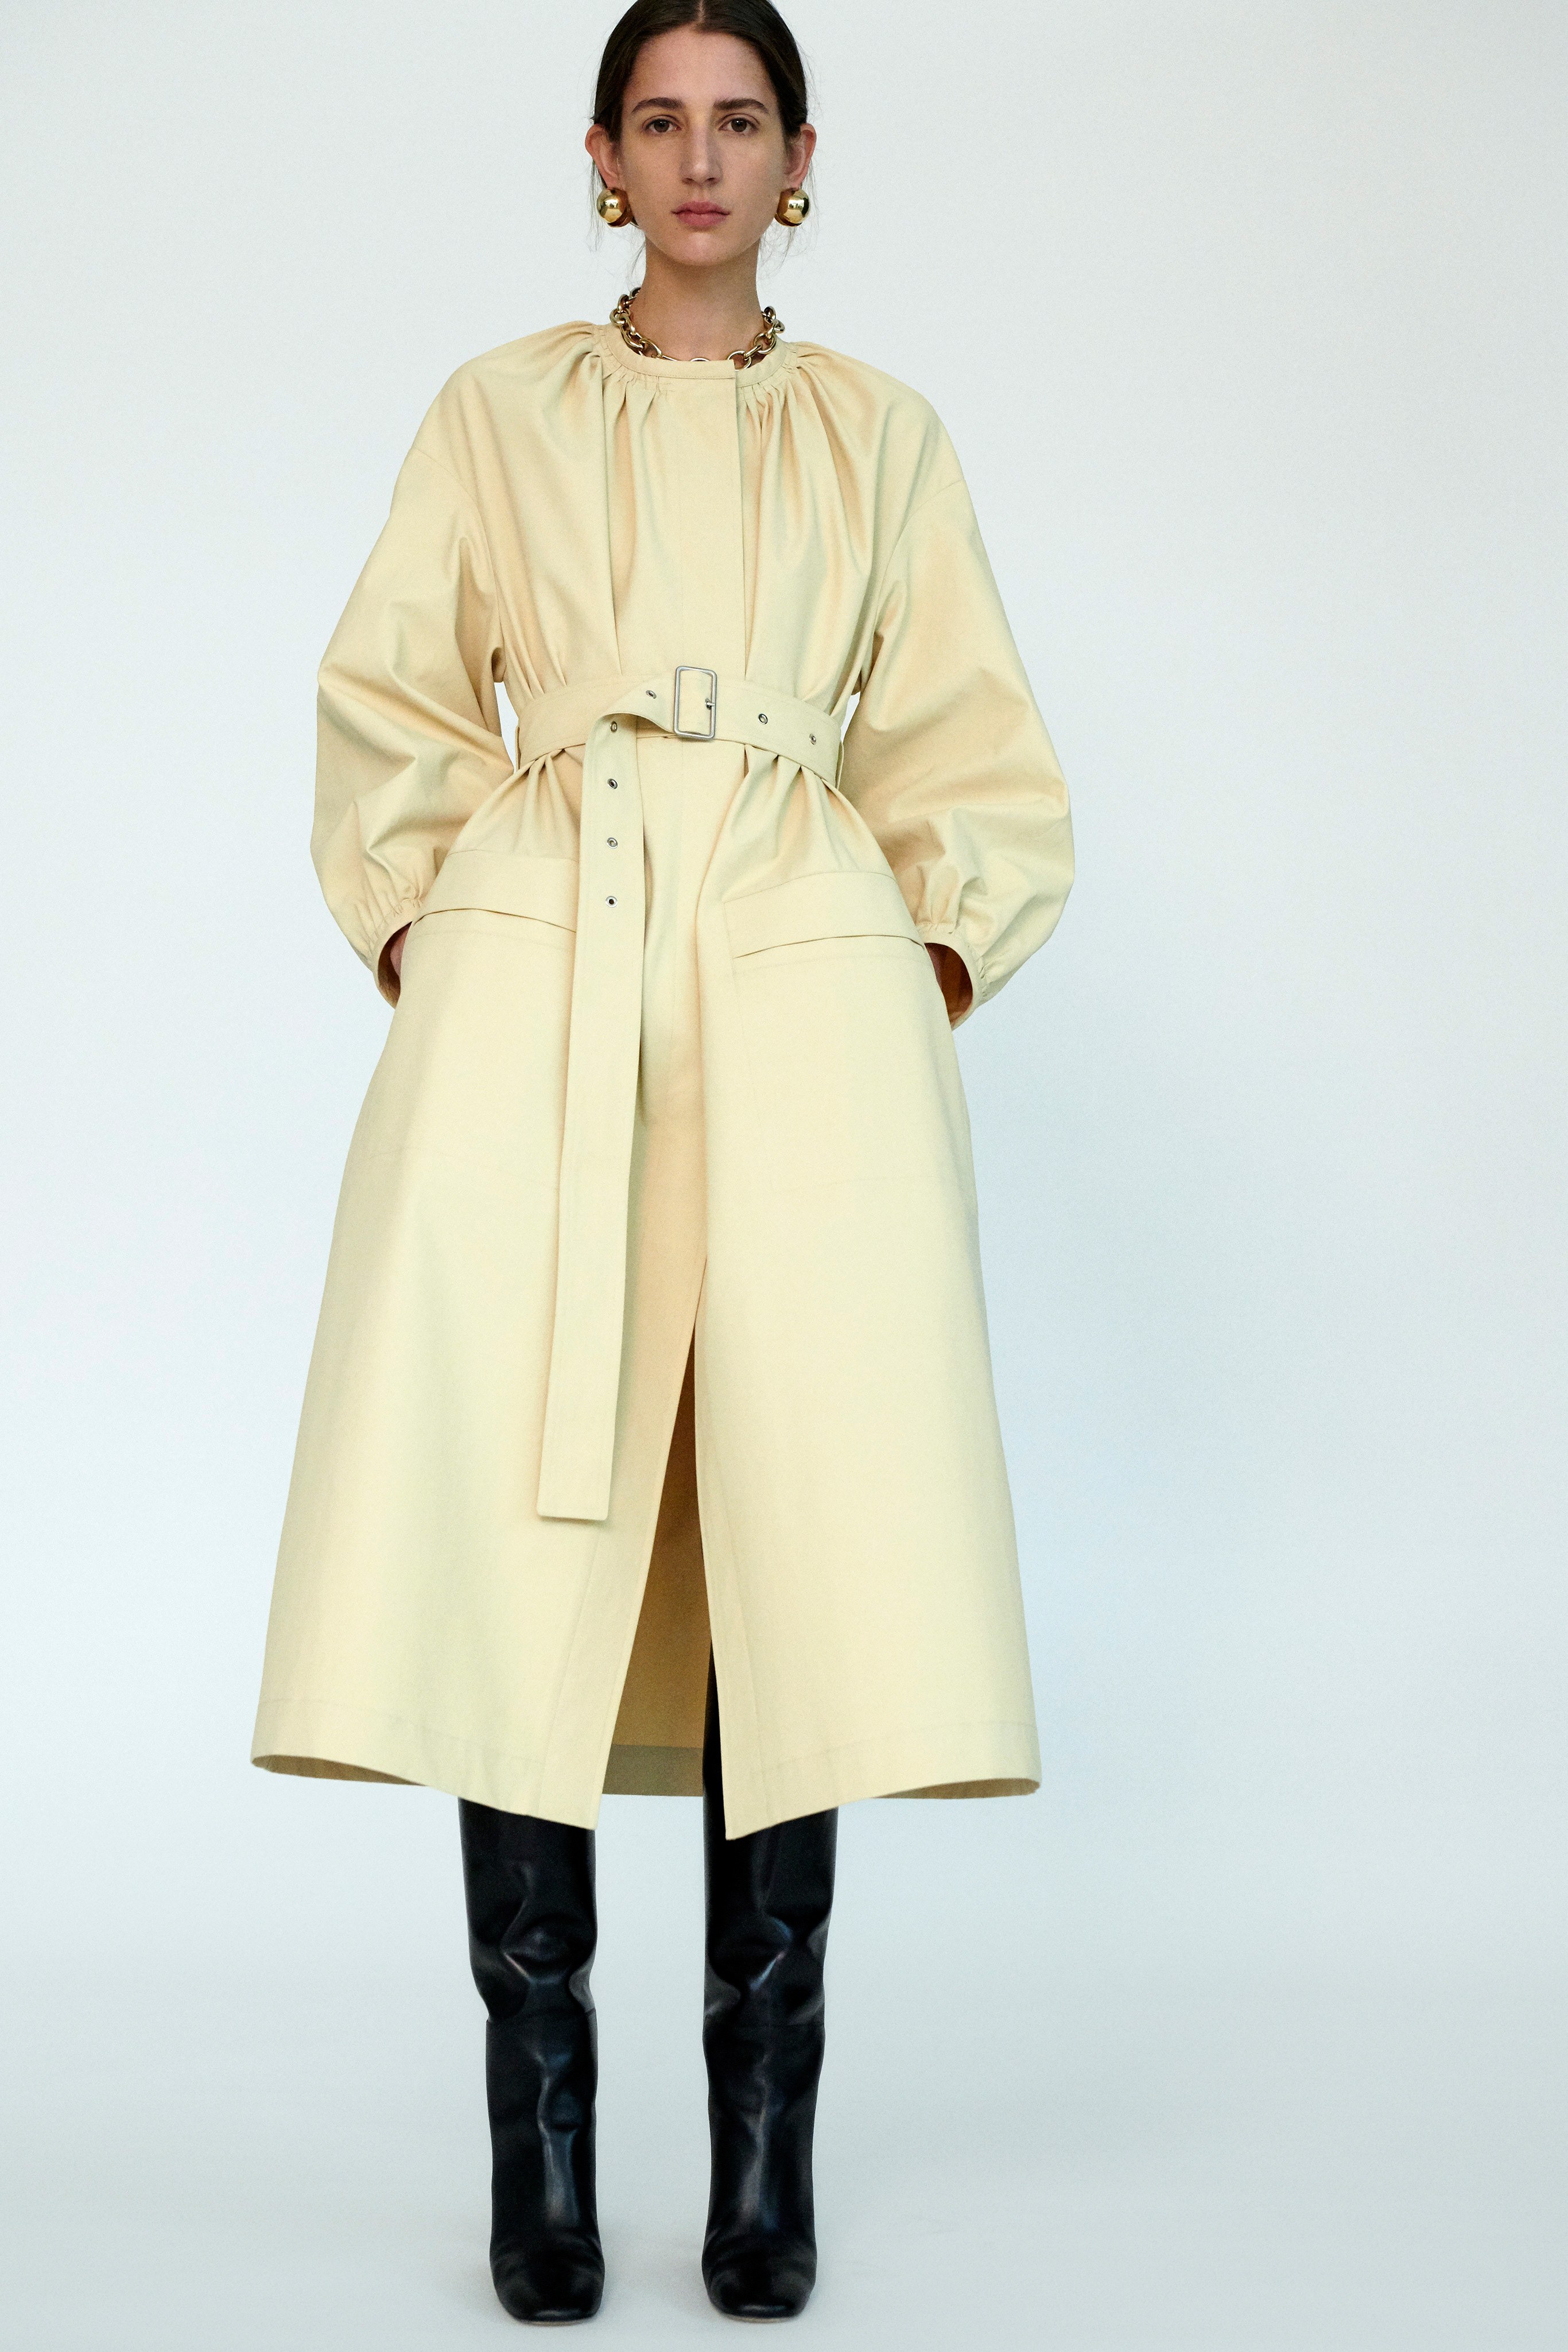 Jil Sander Pre fall 2020 Lookbook trends runway coverage Ready To Wear Vogue coat